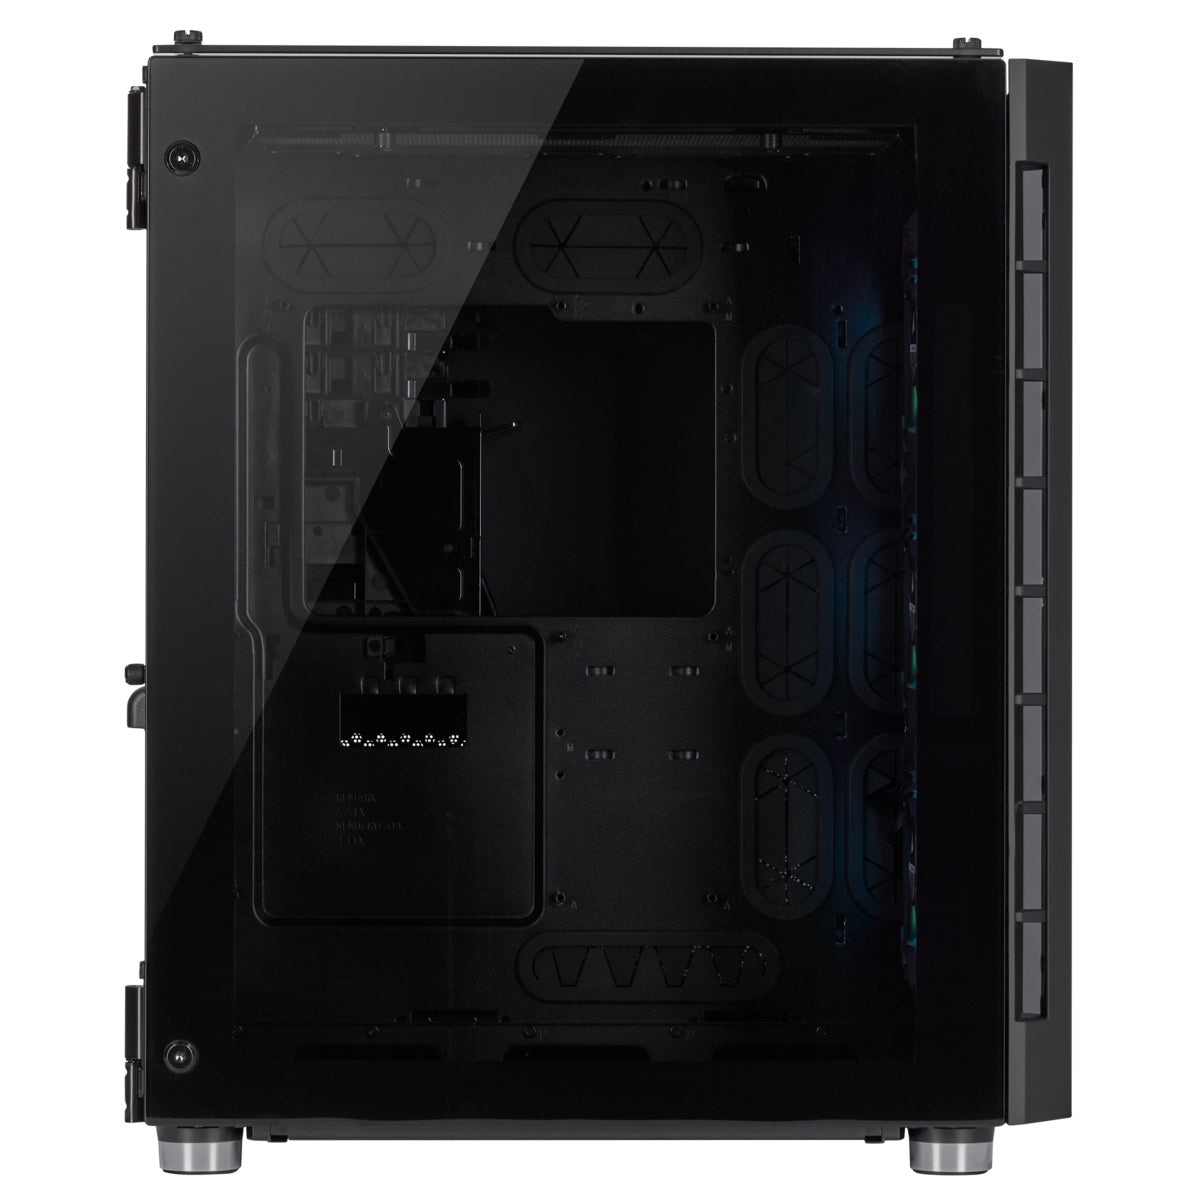 Corsair - AMD Ryzen 7 - 2TB M.2 SSD - RTX 3080 - Waterkoeling - GamePC.BCS100113 - WiFi